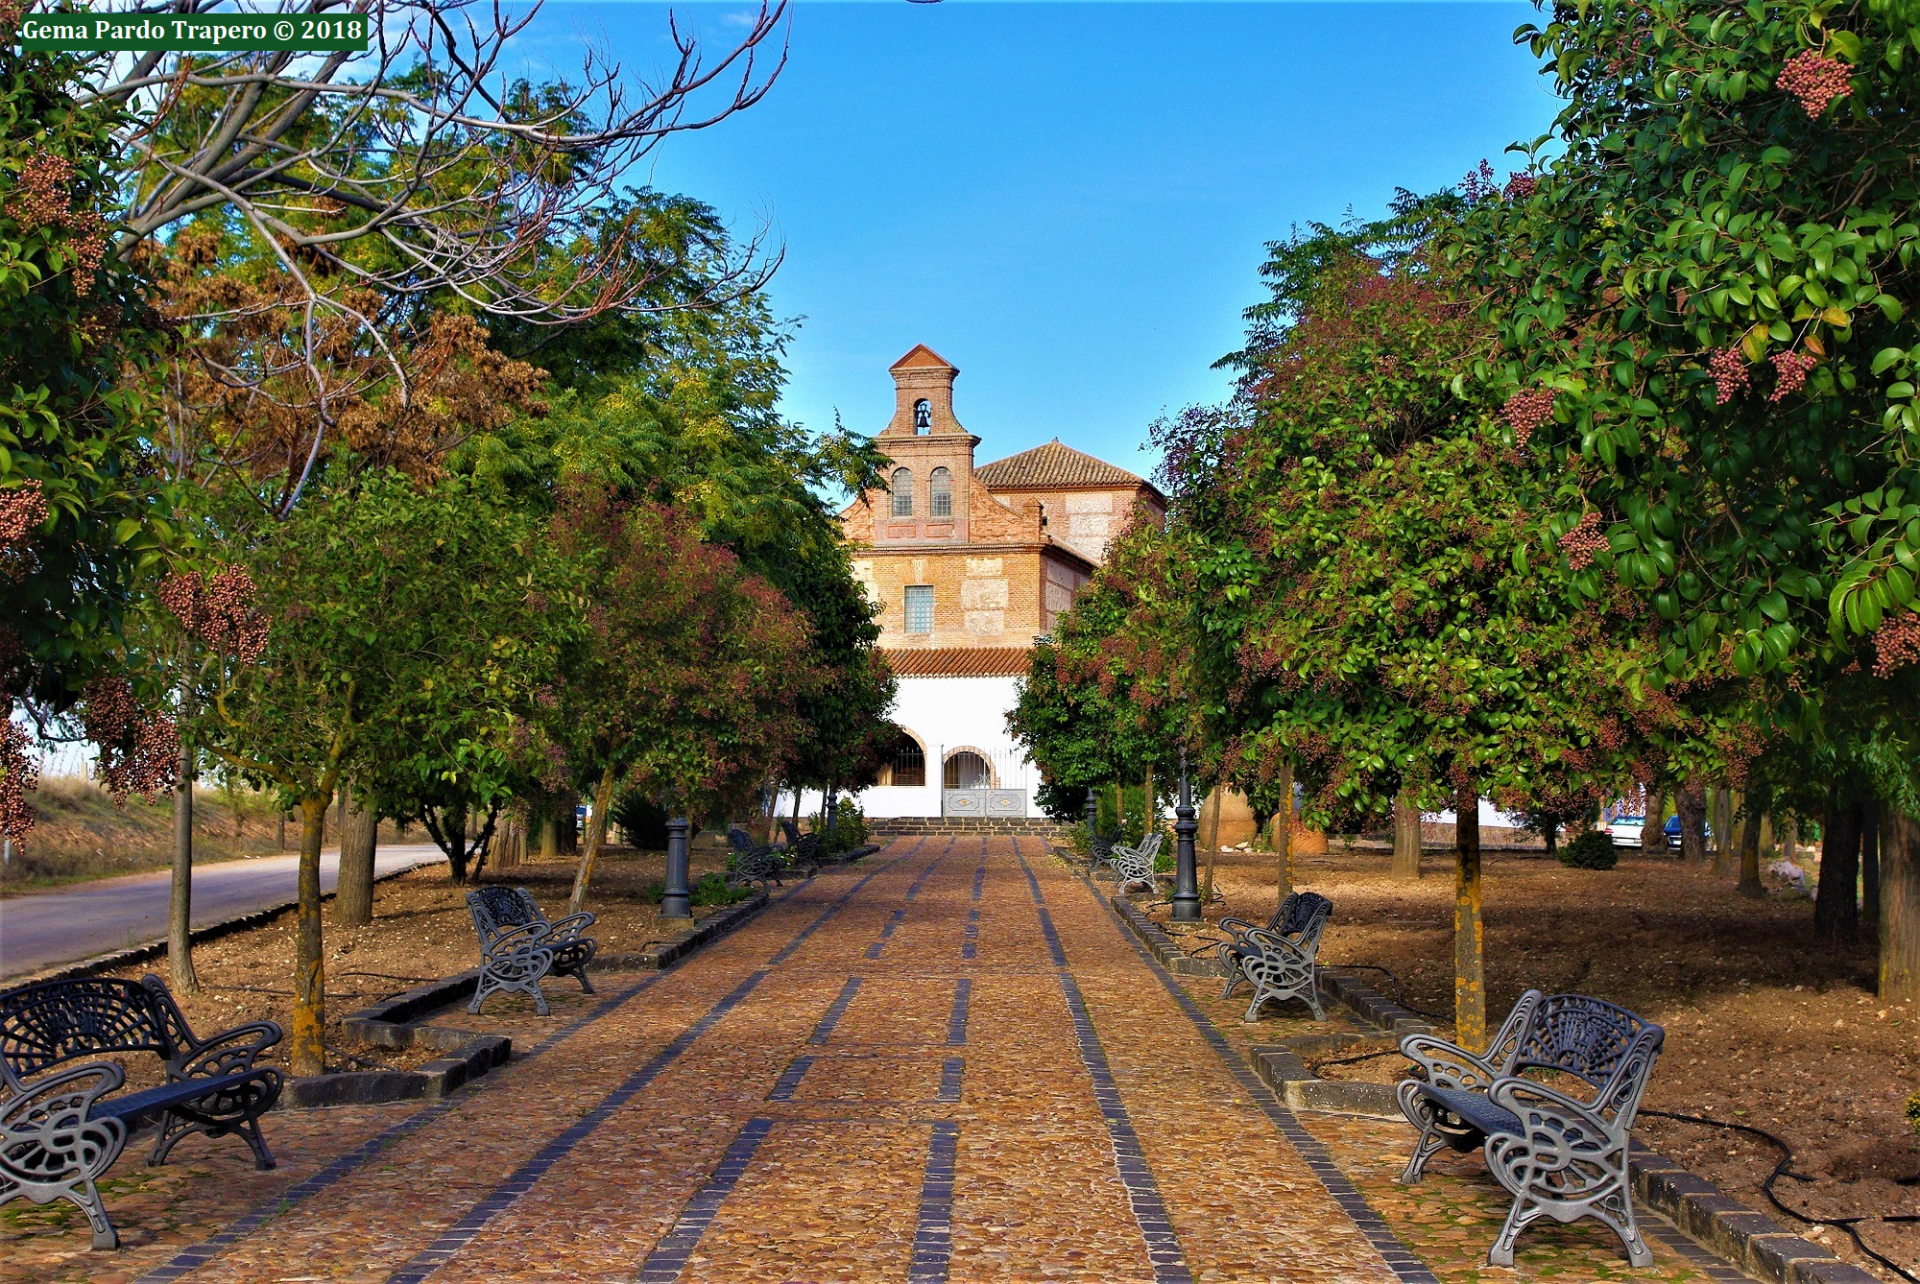 A serene view of a peaceful park bench under a tall tree, alongside a quaint church in Castilla la Mancha, Spain. Ideal as a serene desktop background.